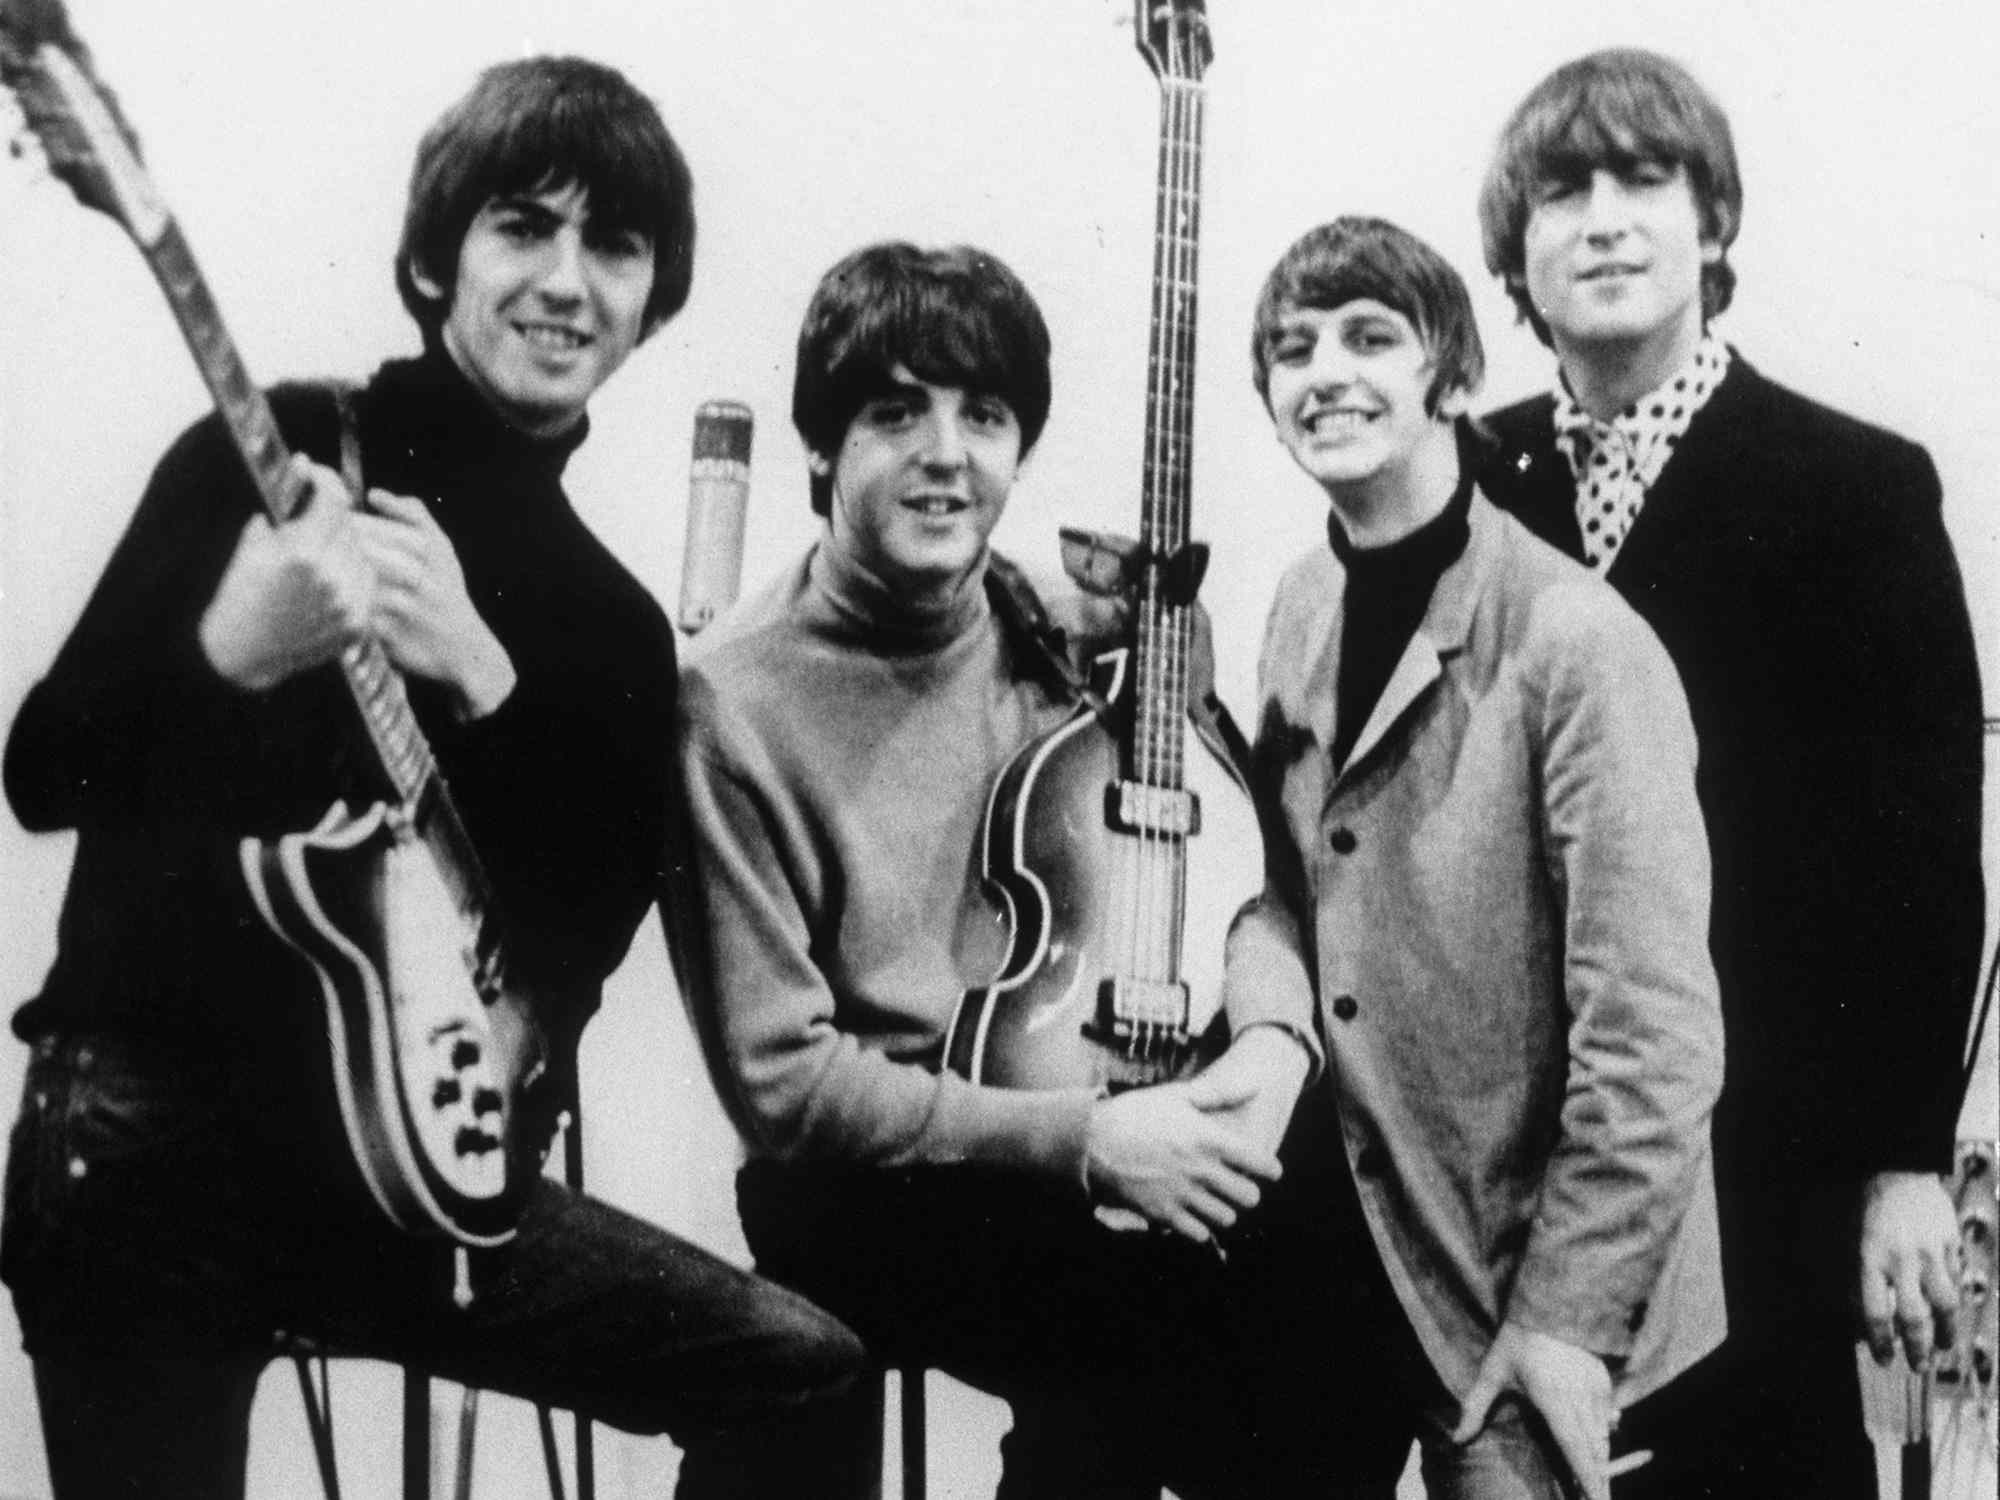 The Beatles. 